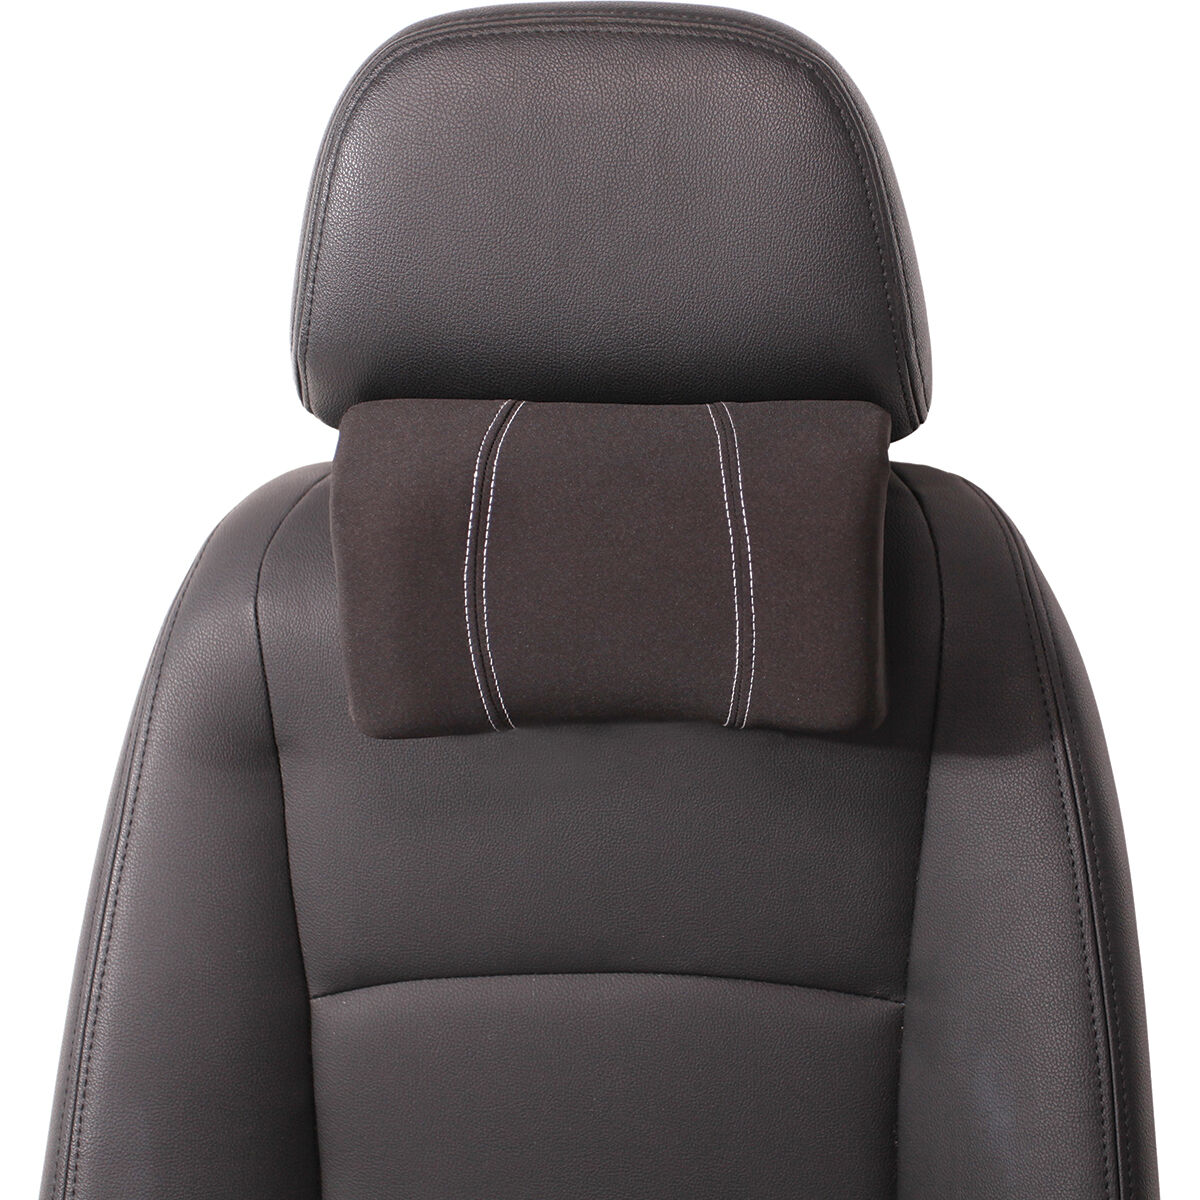 jtxqy Neck Pillow for Driving ，Car Seat Headrest Neck Rest Cushion 3D Memory Foam Soft Breathable Seat Headrest Pad Neck Rest Headrest Accessories 